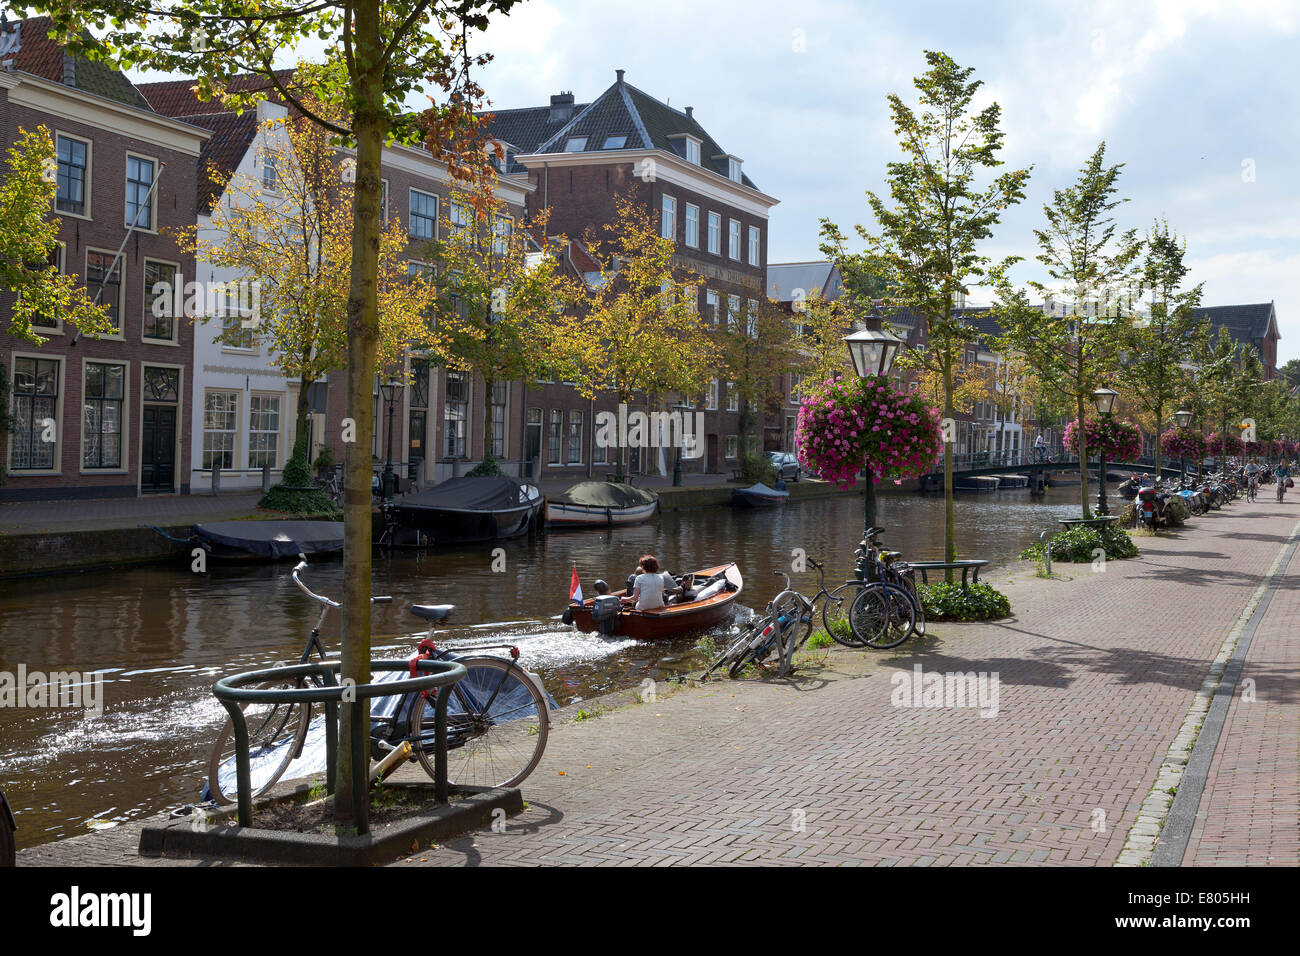 Recreatio boat in canal on Oude Rijn, Leiden, Netherlands Stock Photo